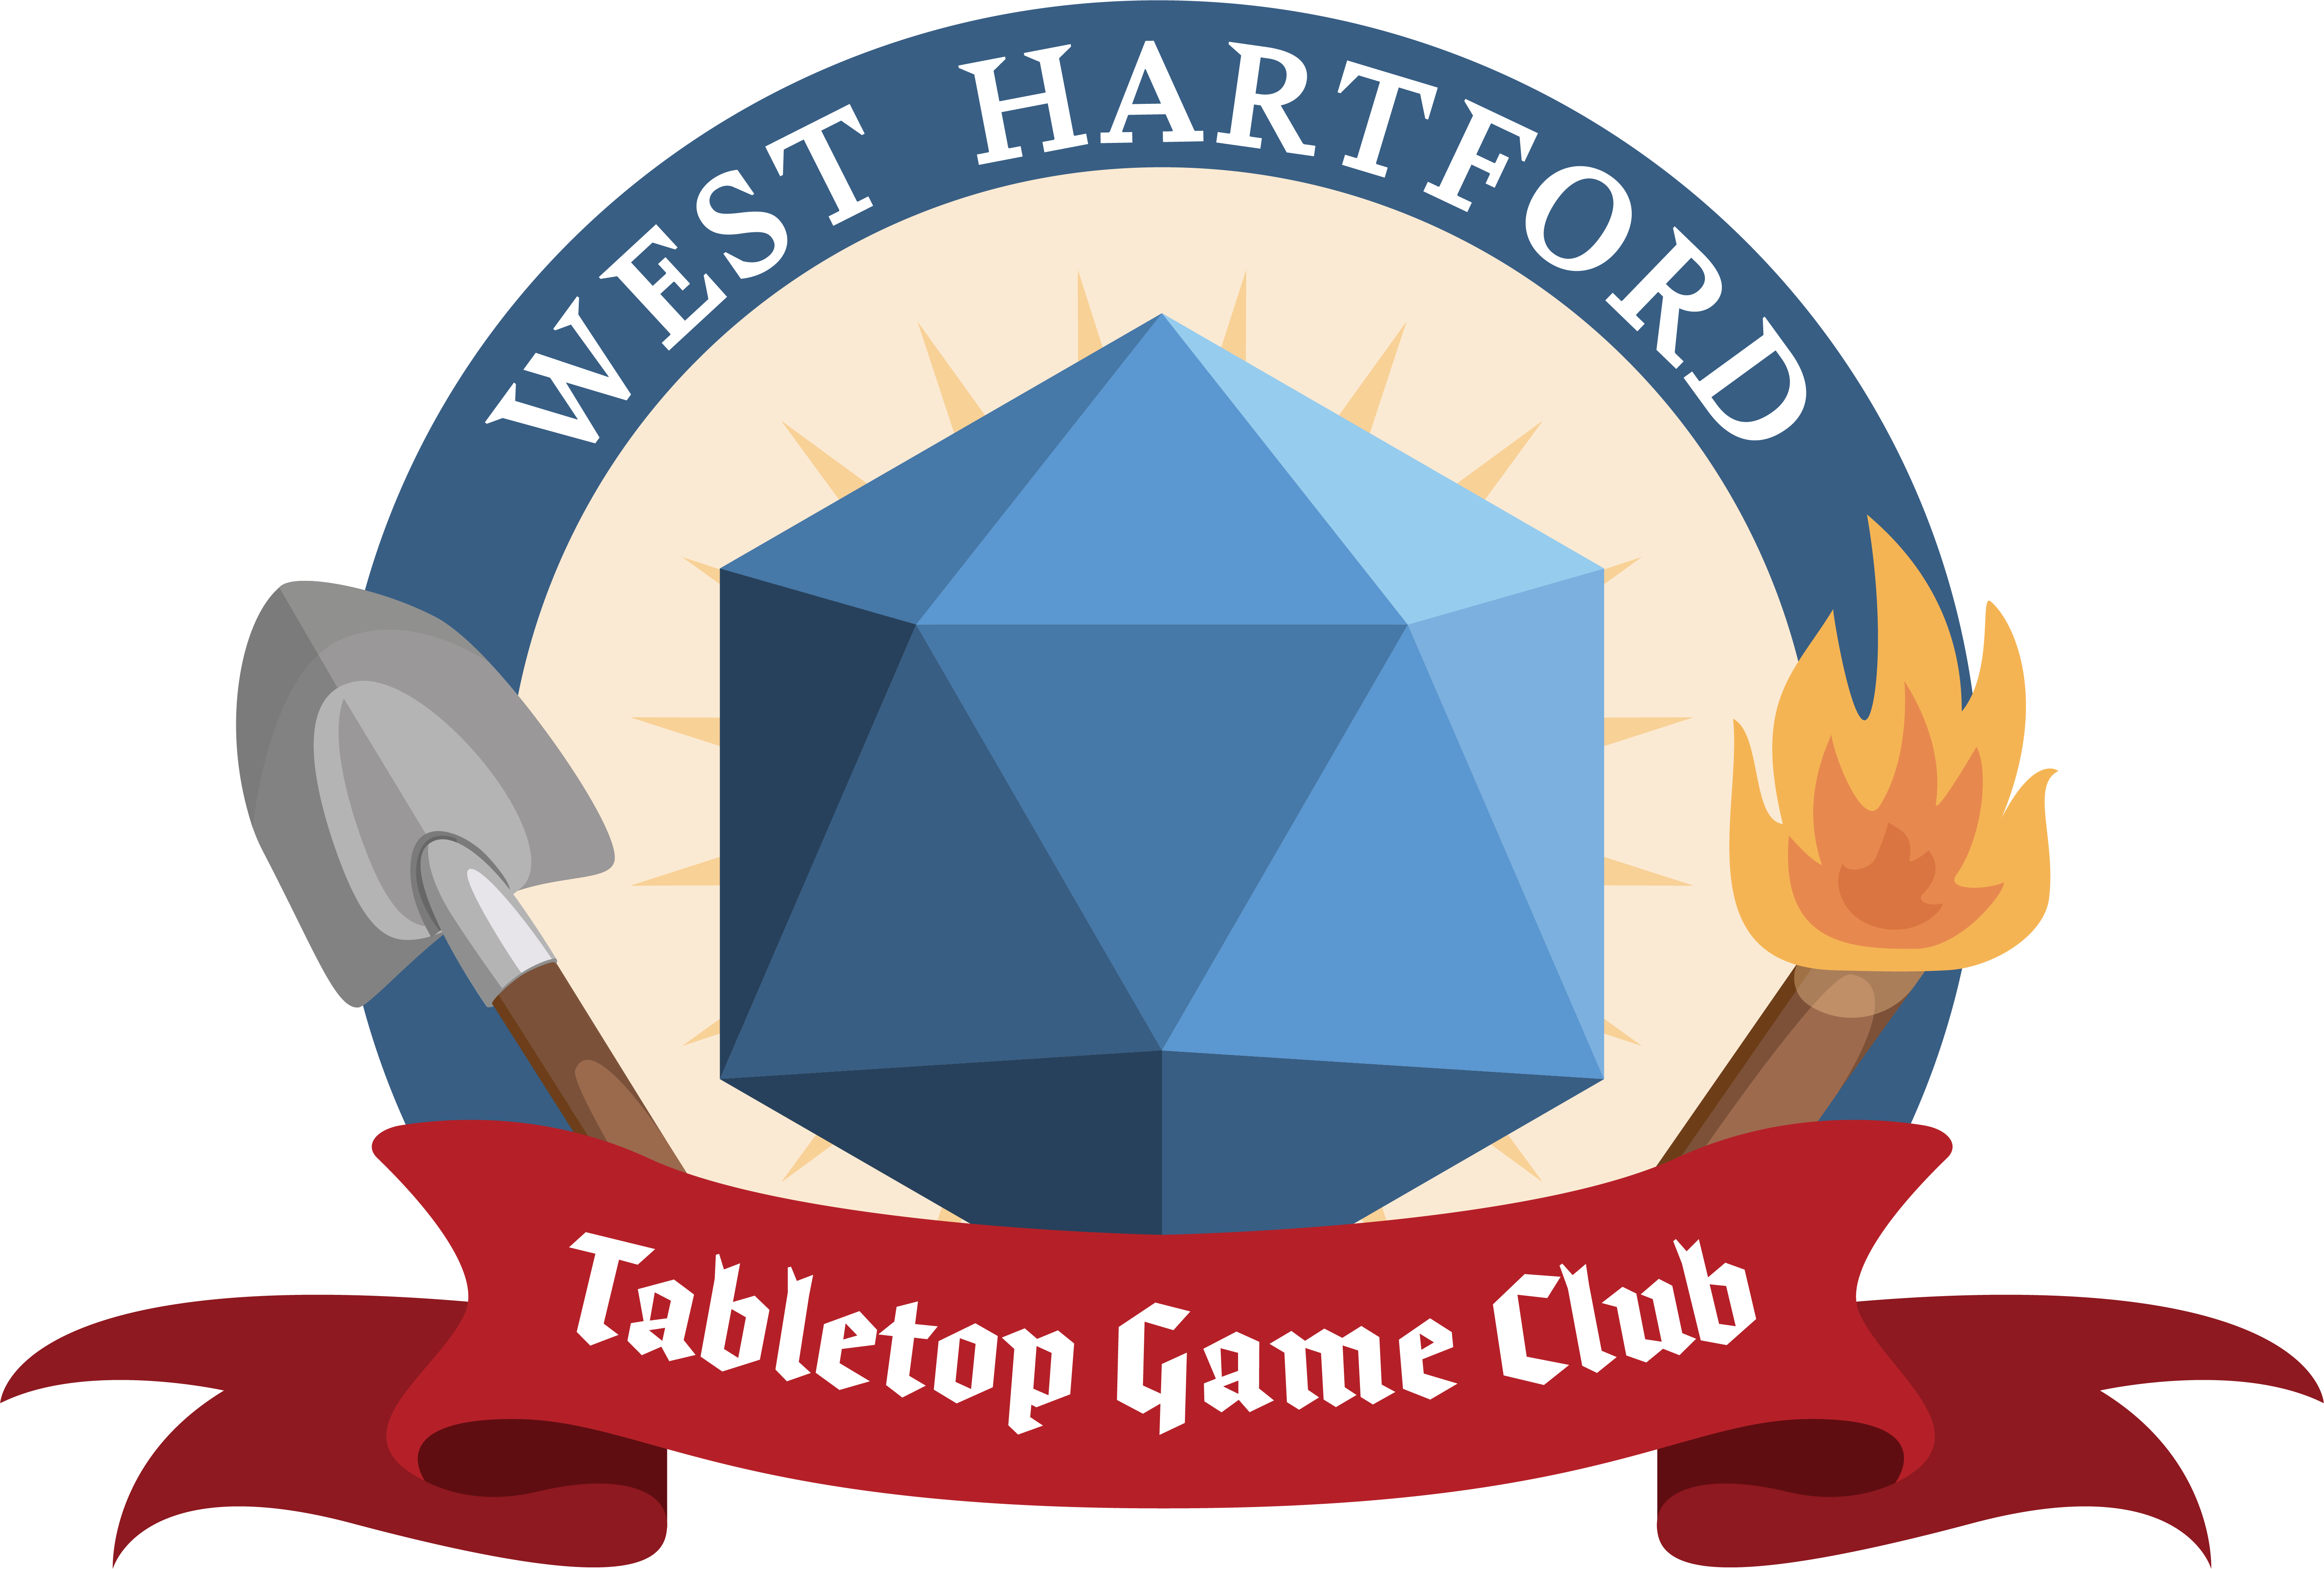 Tabletop Game club logo